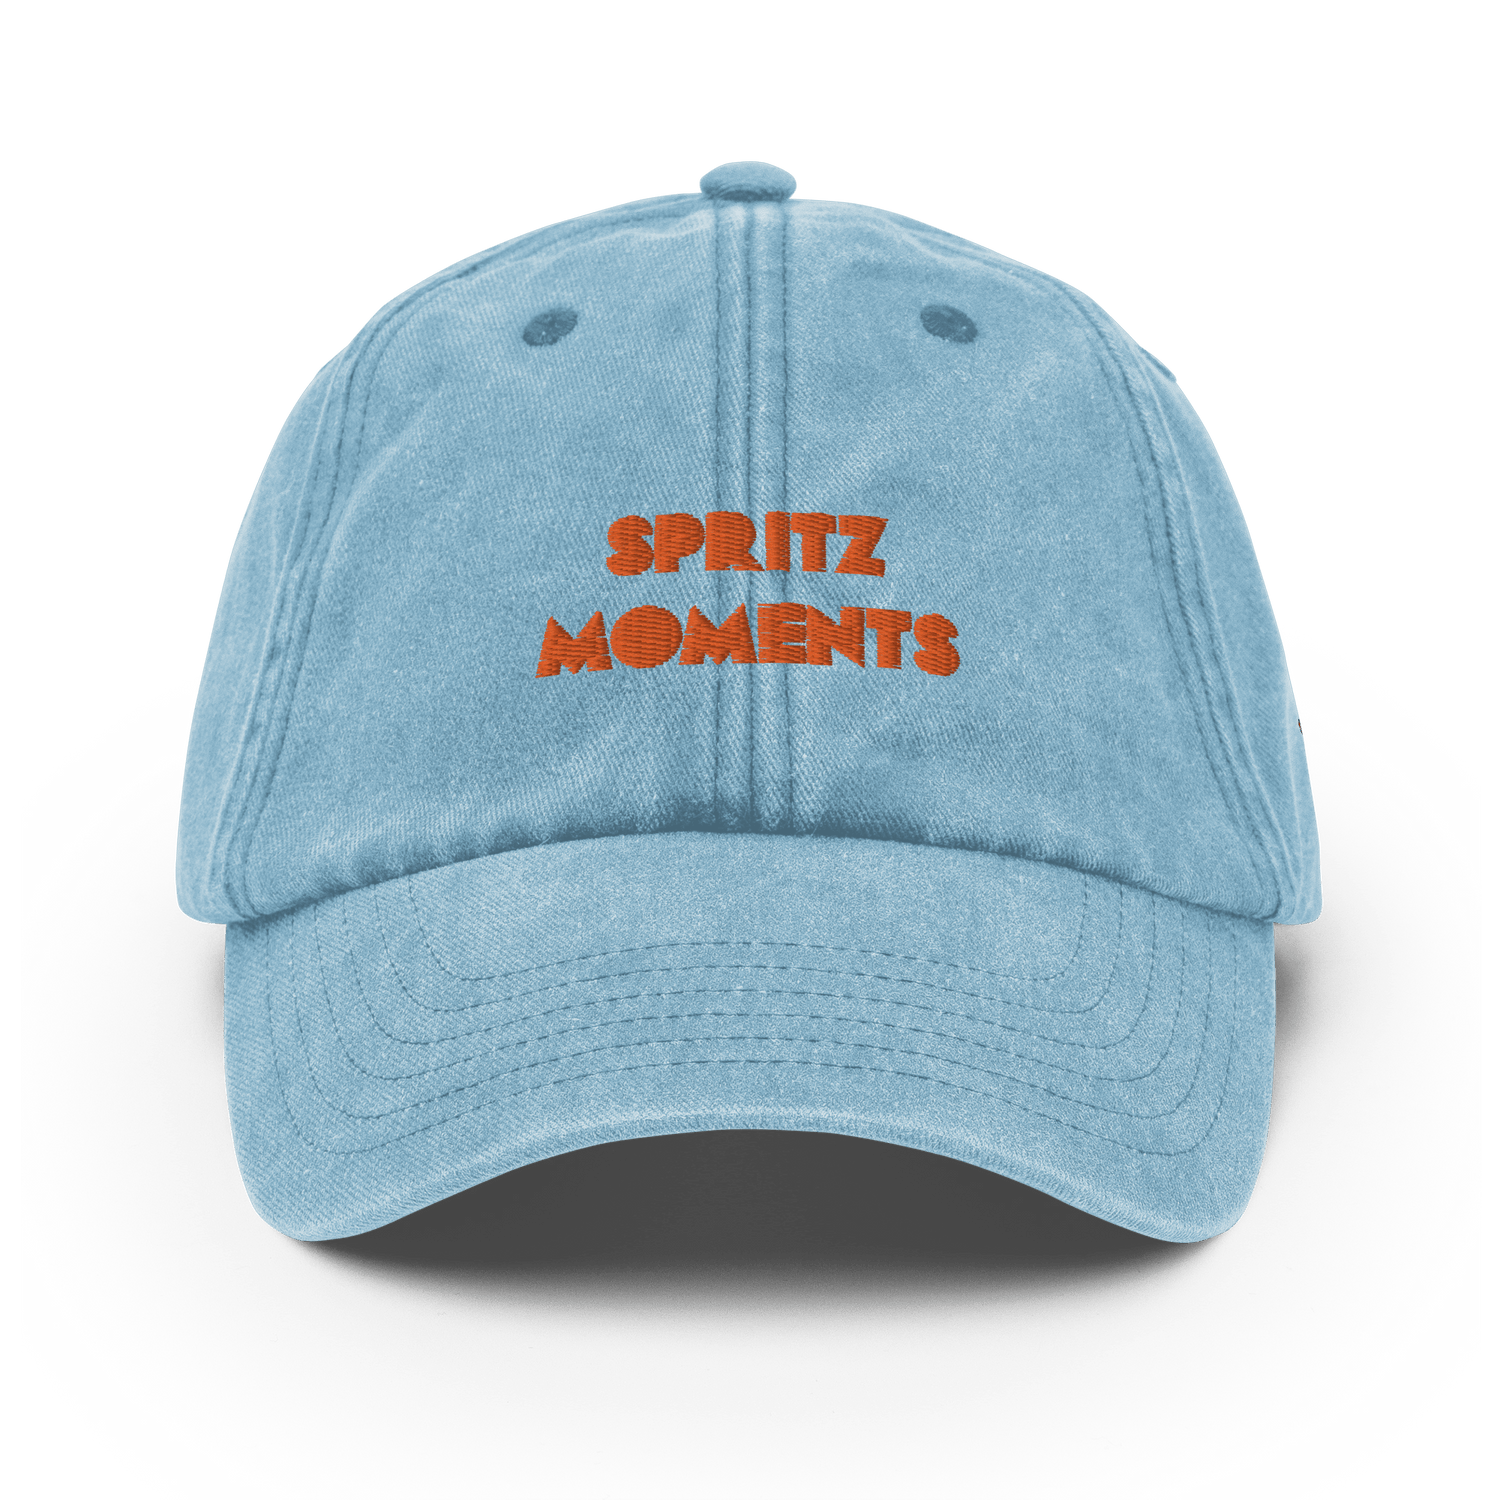 The Spritz Moments Vintage Hat